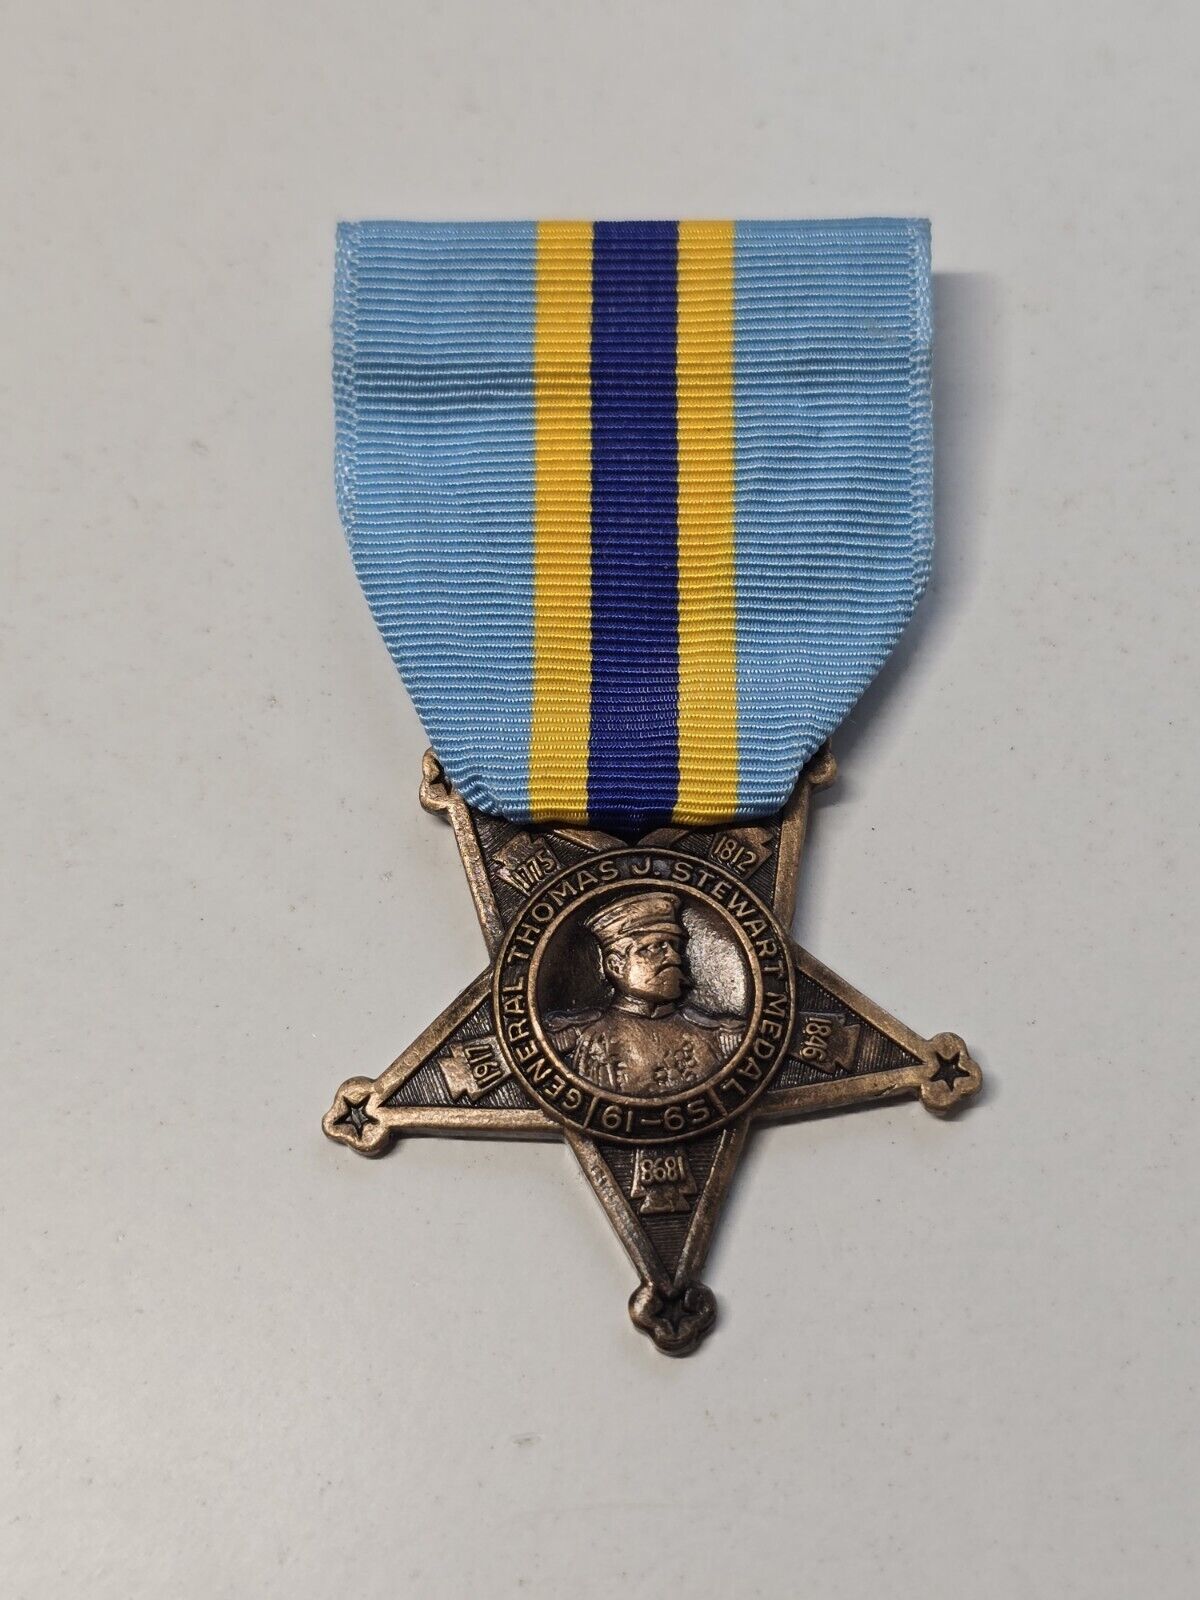 Vintage Thomas J Stewart Medal - 100% Drill Attendance Military Star Ribbon